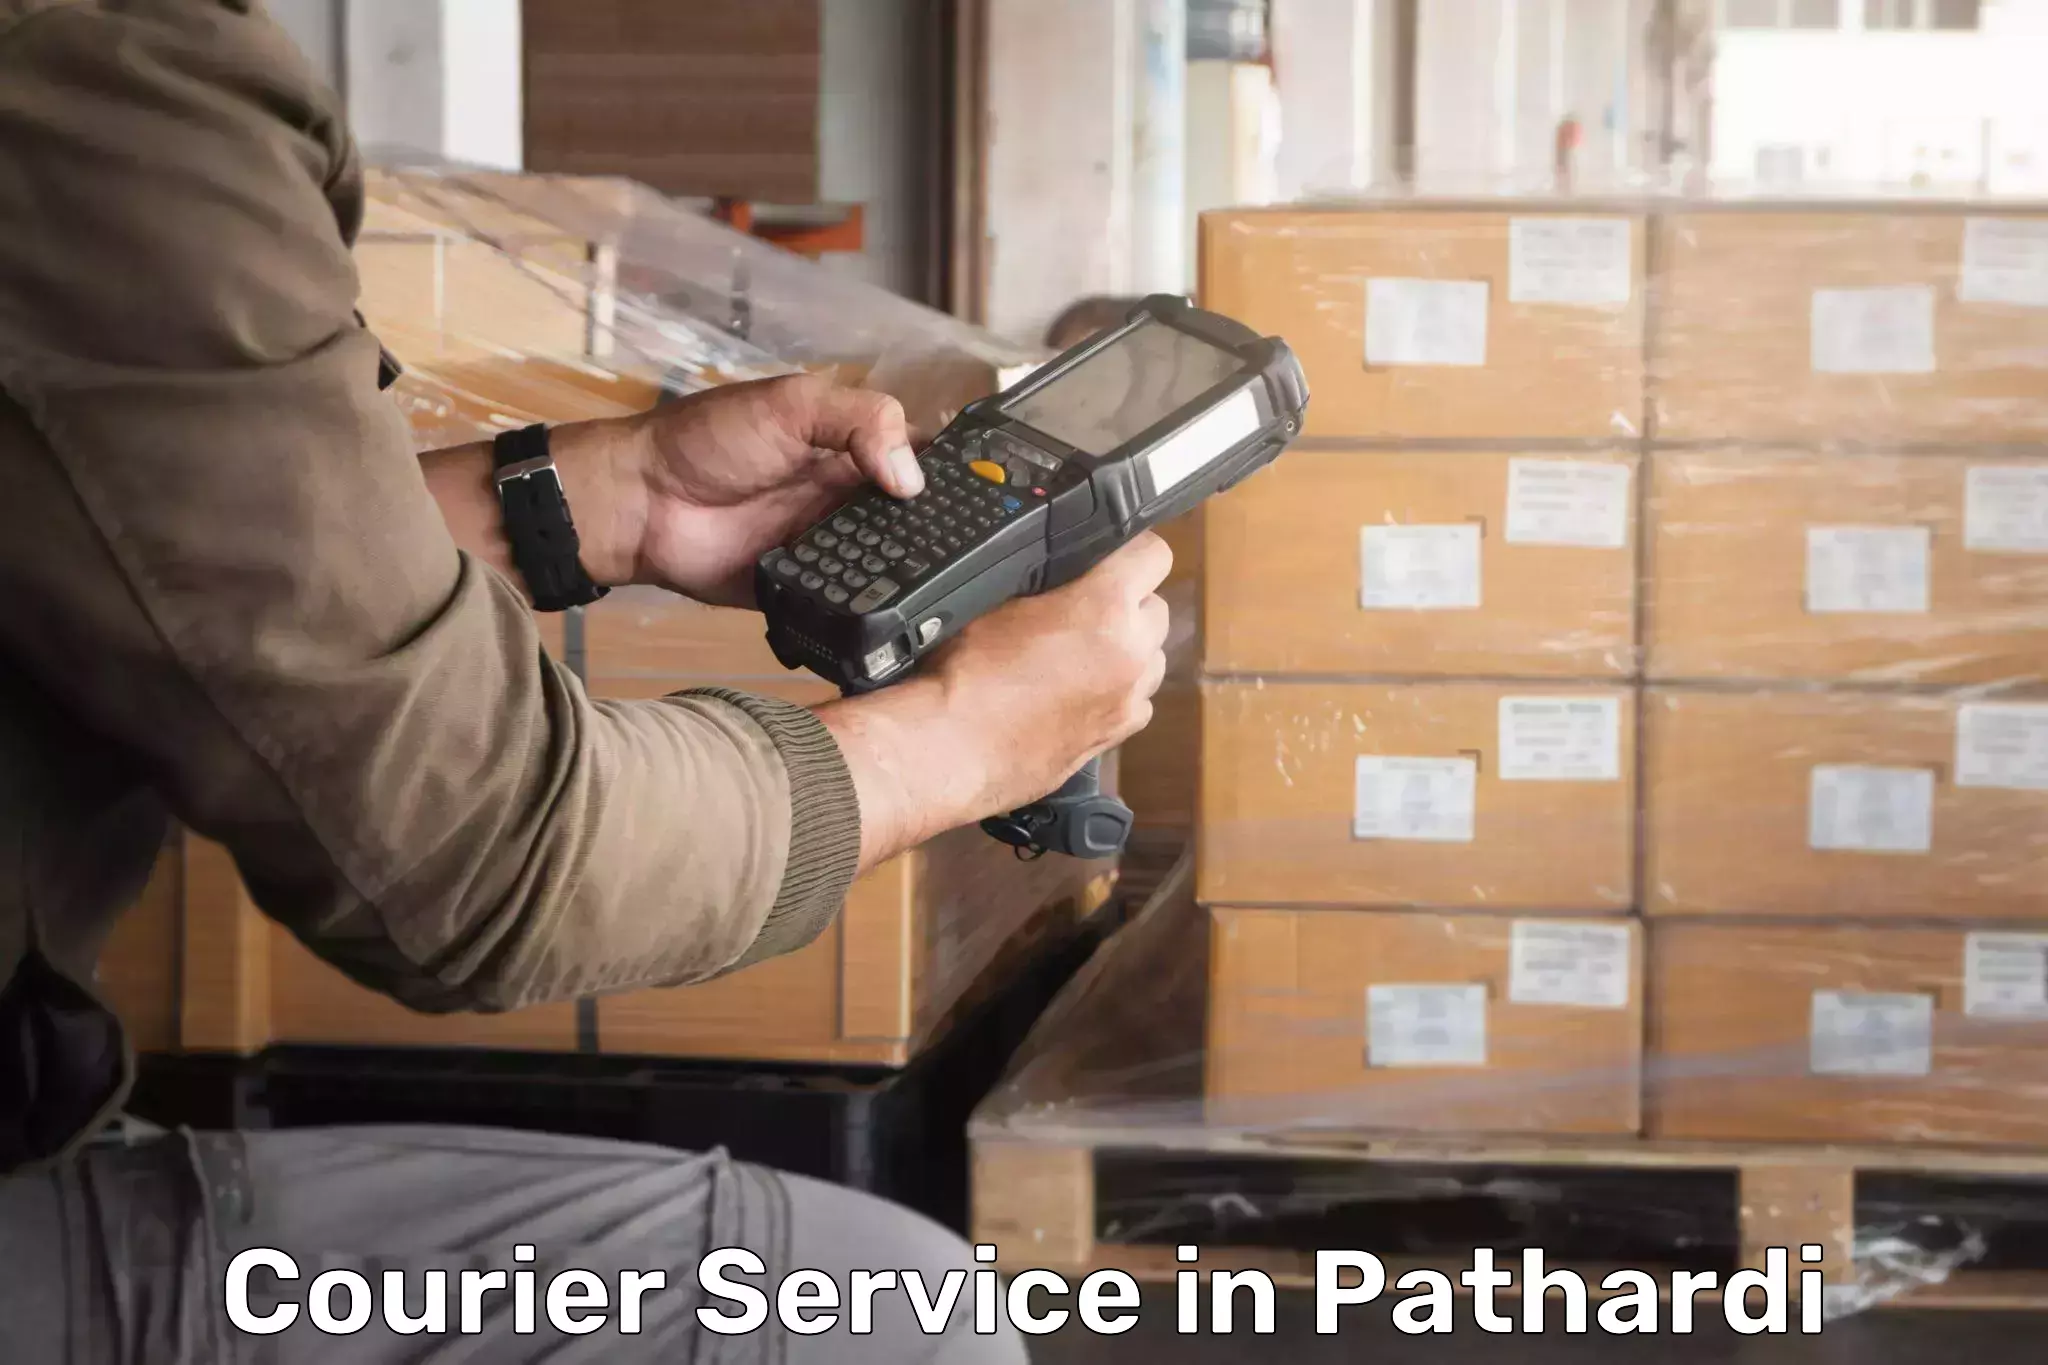 Efficient order fulfillment in Pathardi